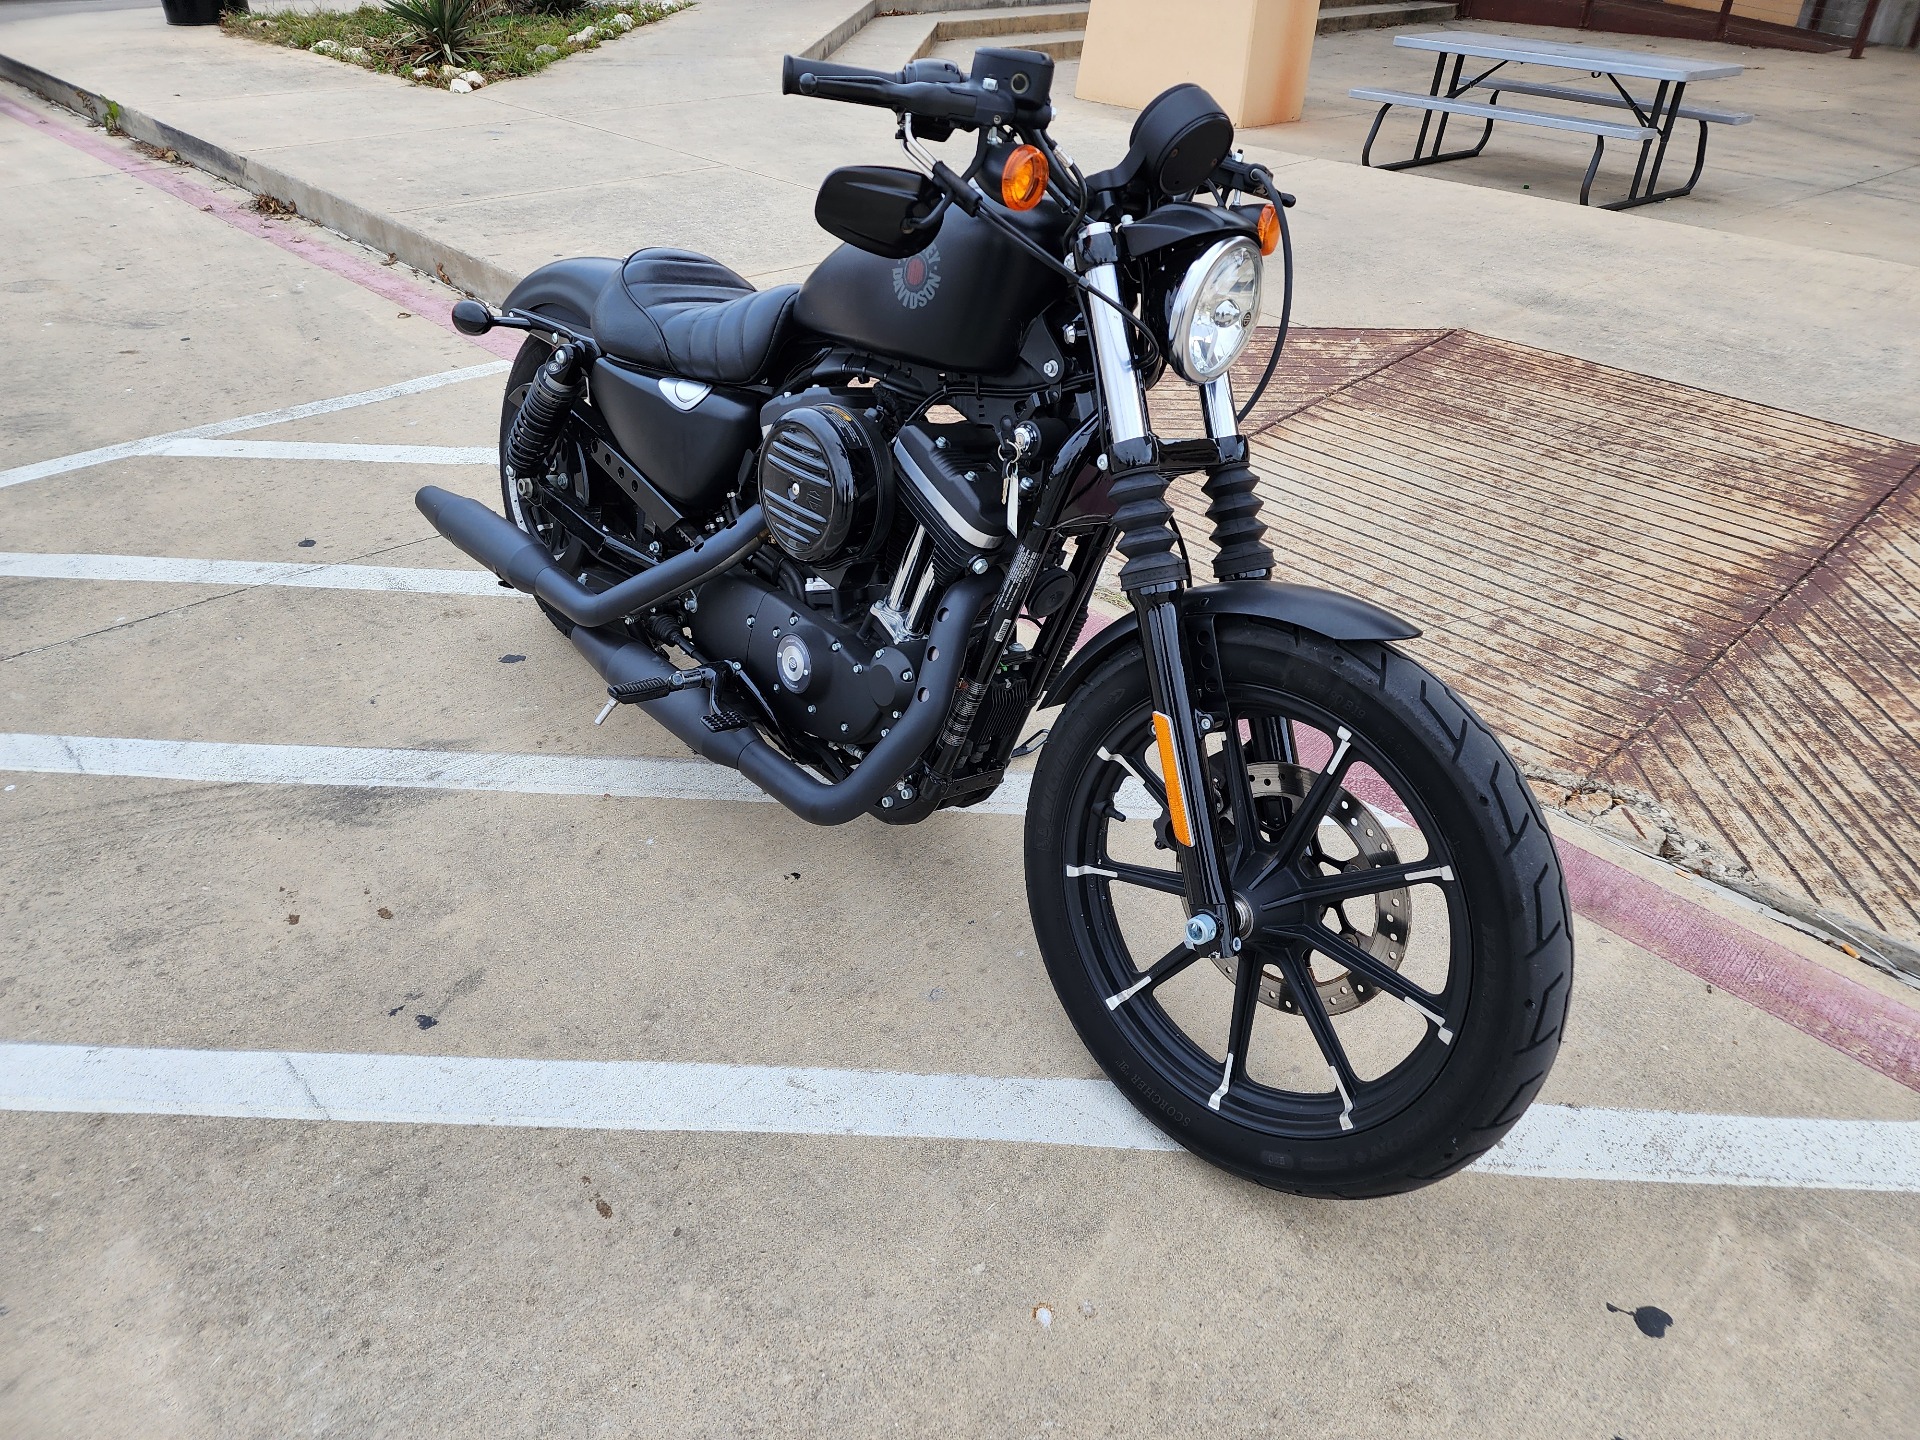 2019 Harley-Davidson Iron 883™ in San Antonio, Texas - Photo 2